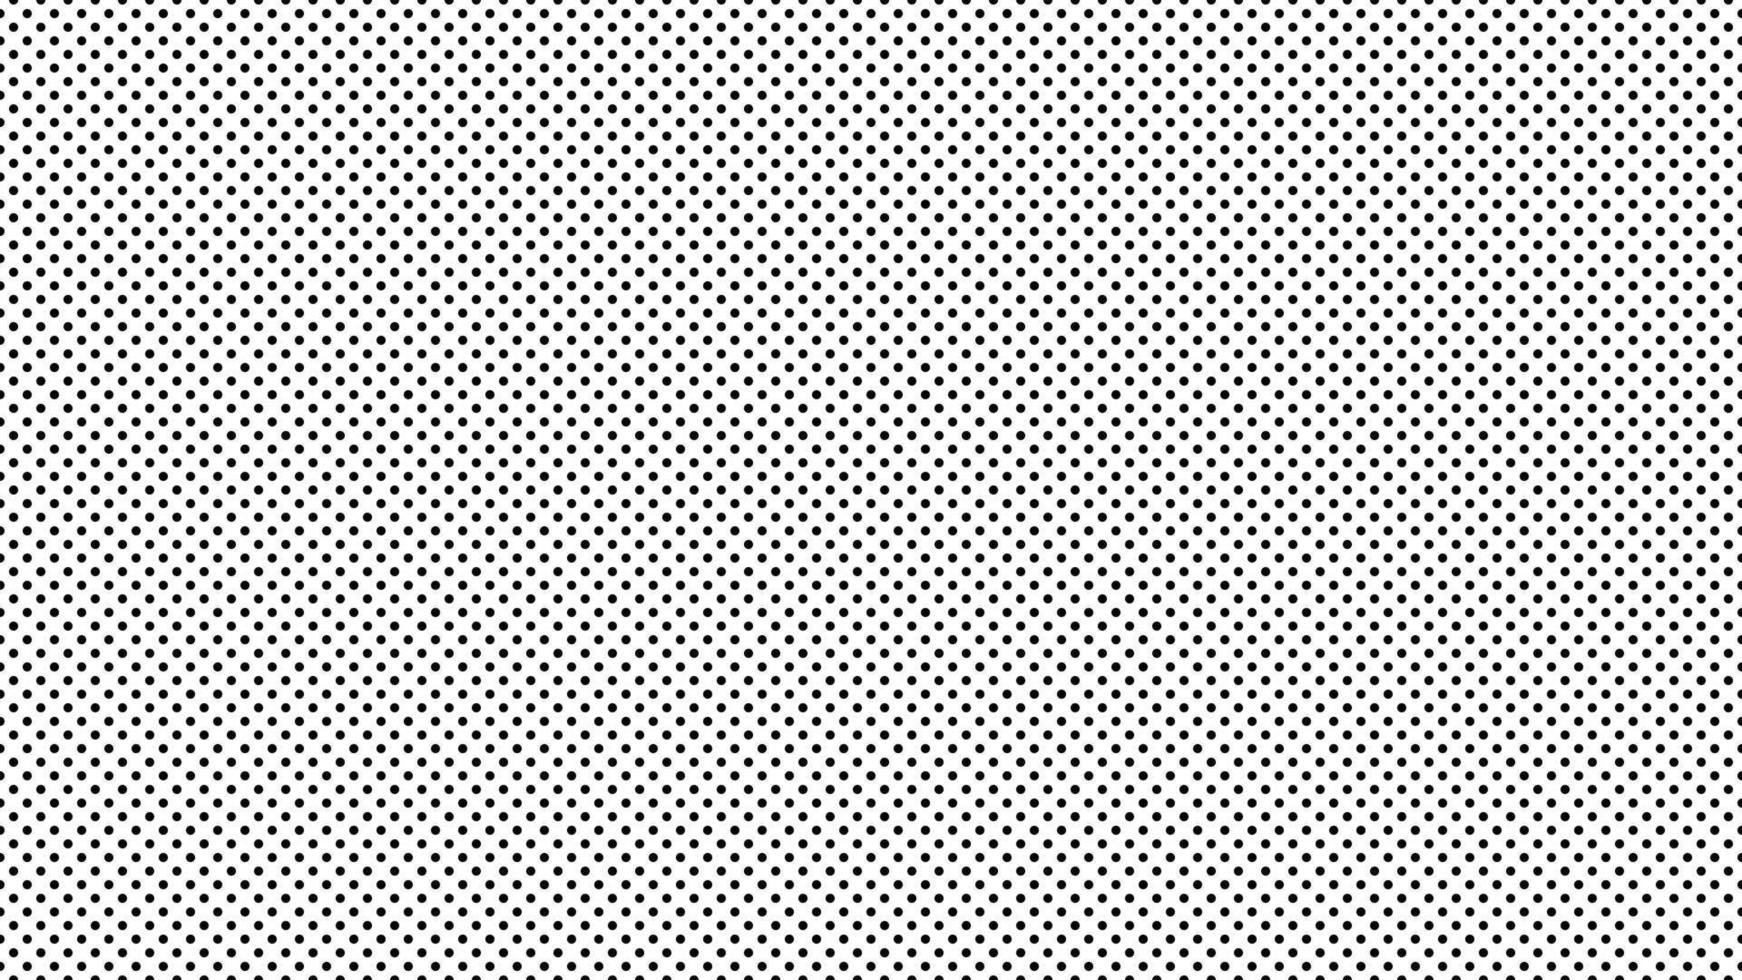 color polka dots background vector